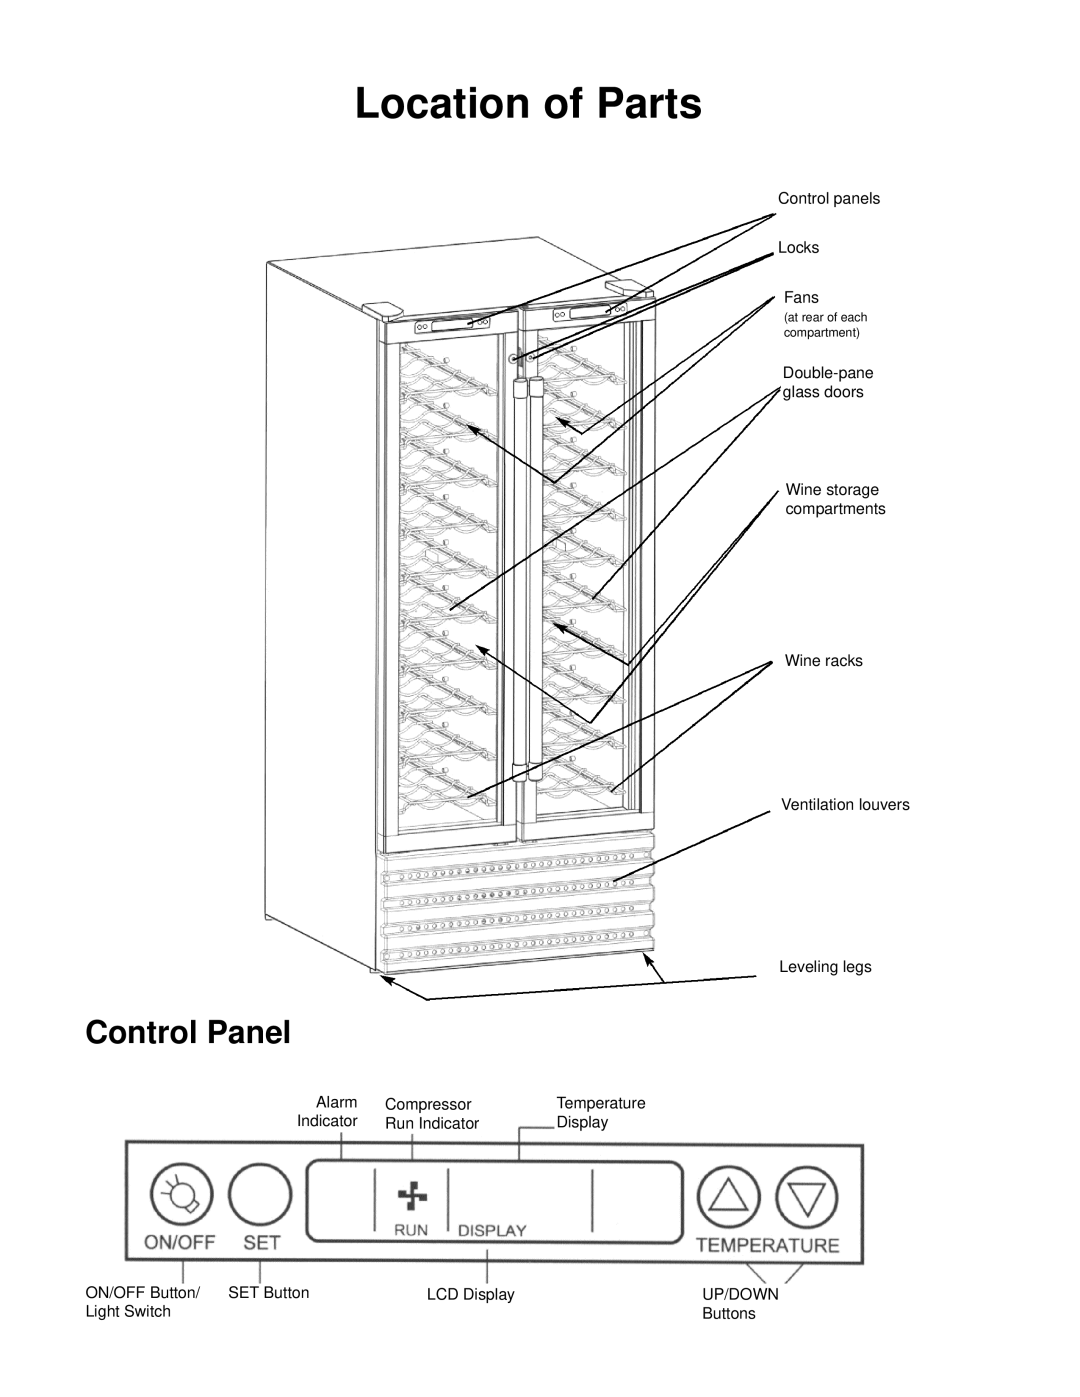 Franklin Industries, L.L.C FCW100 manual Location of Parts, Control Panel 